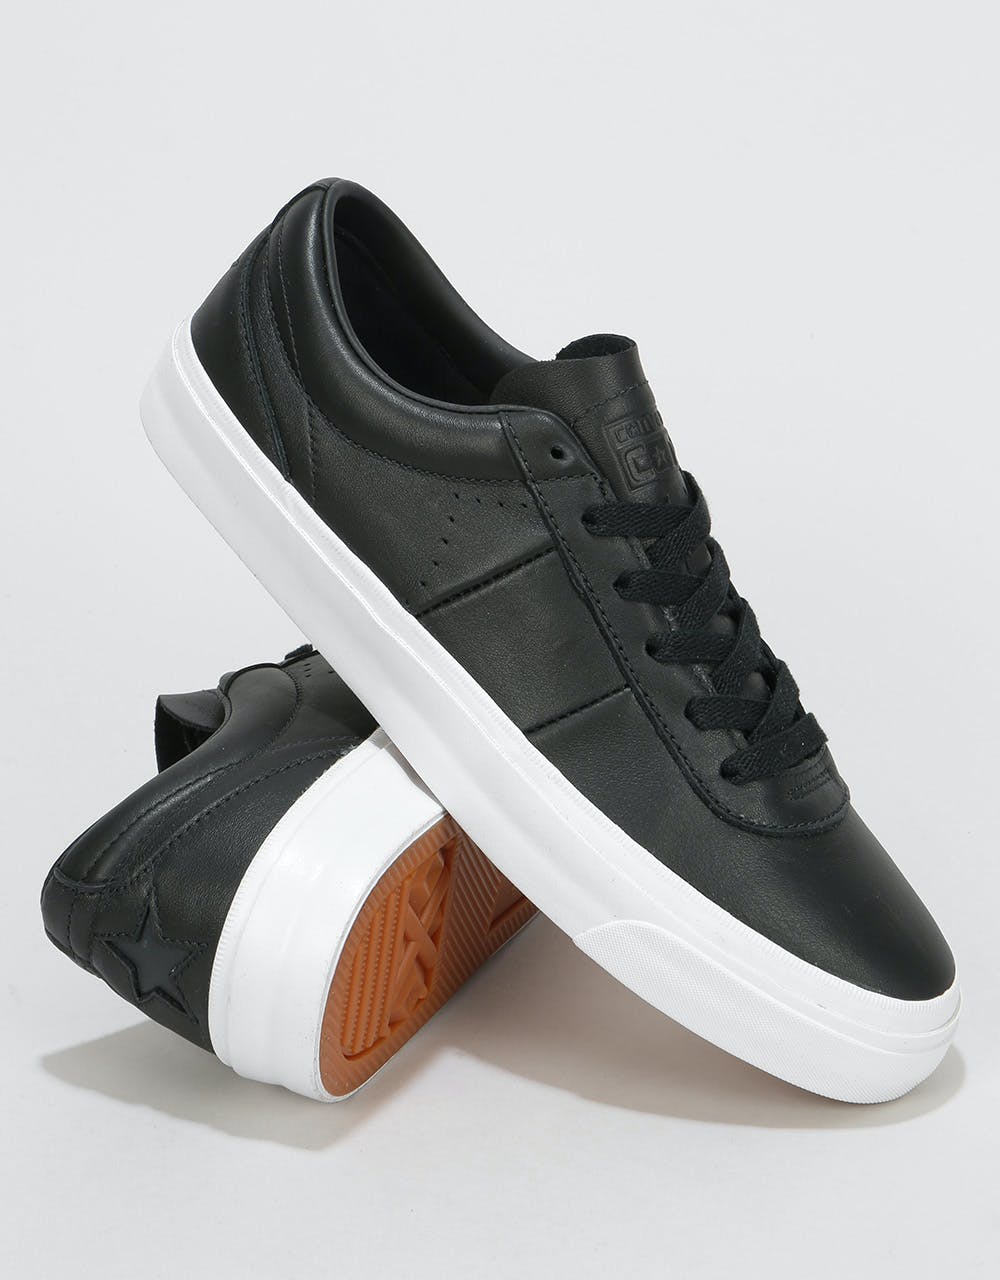 Converse One Star CC Pro Ox Skate Shoes - Black/Black/White